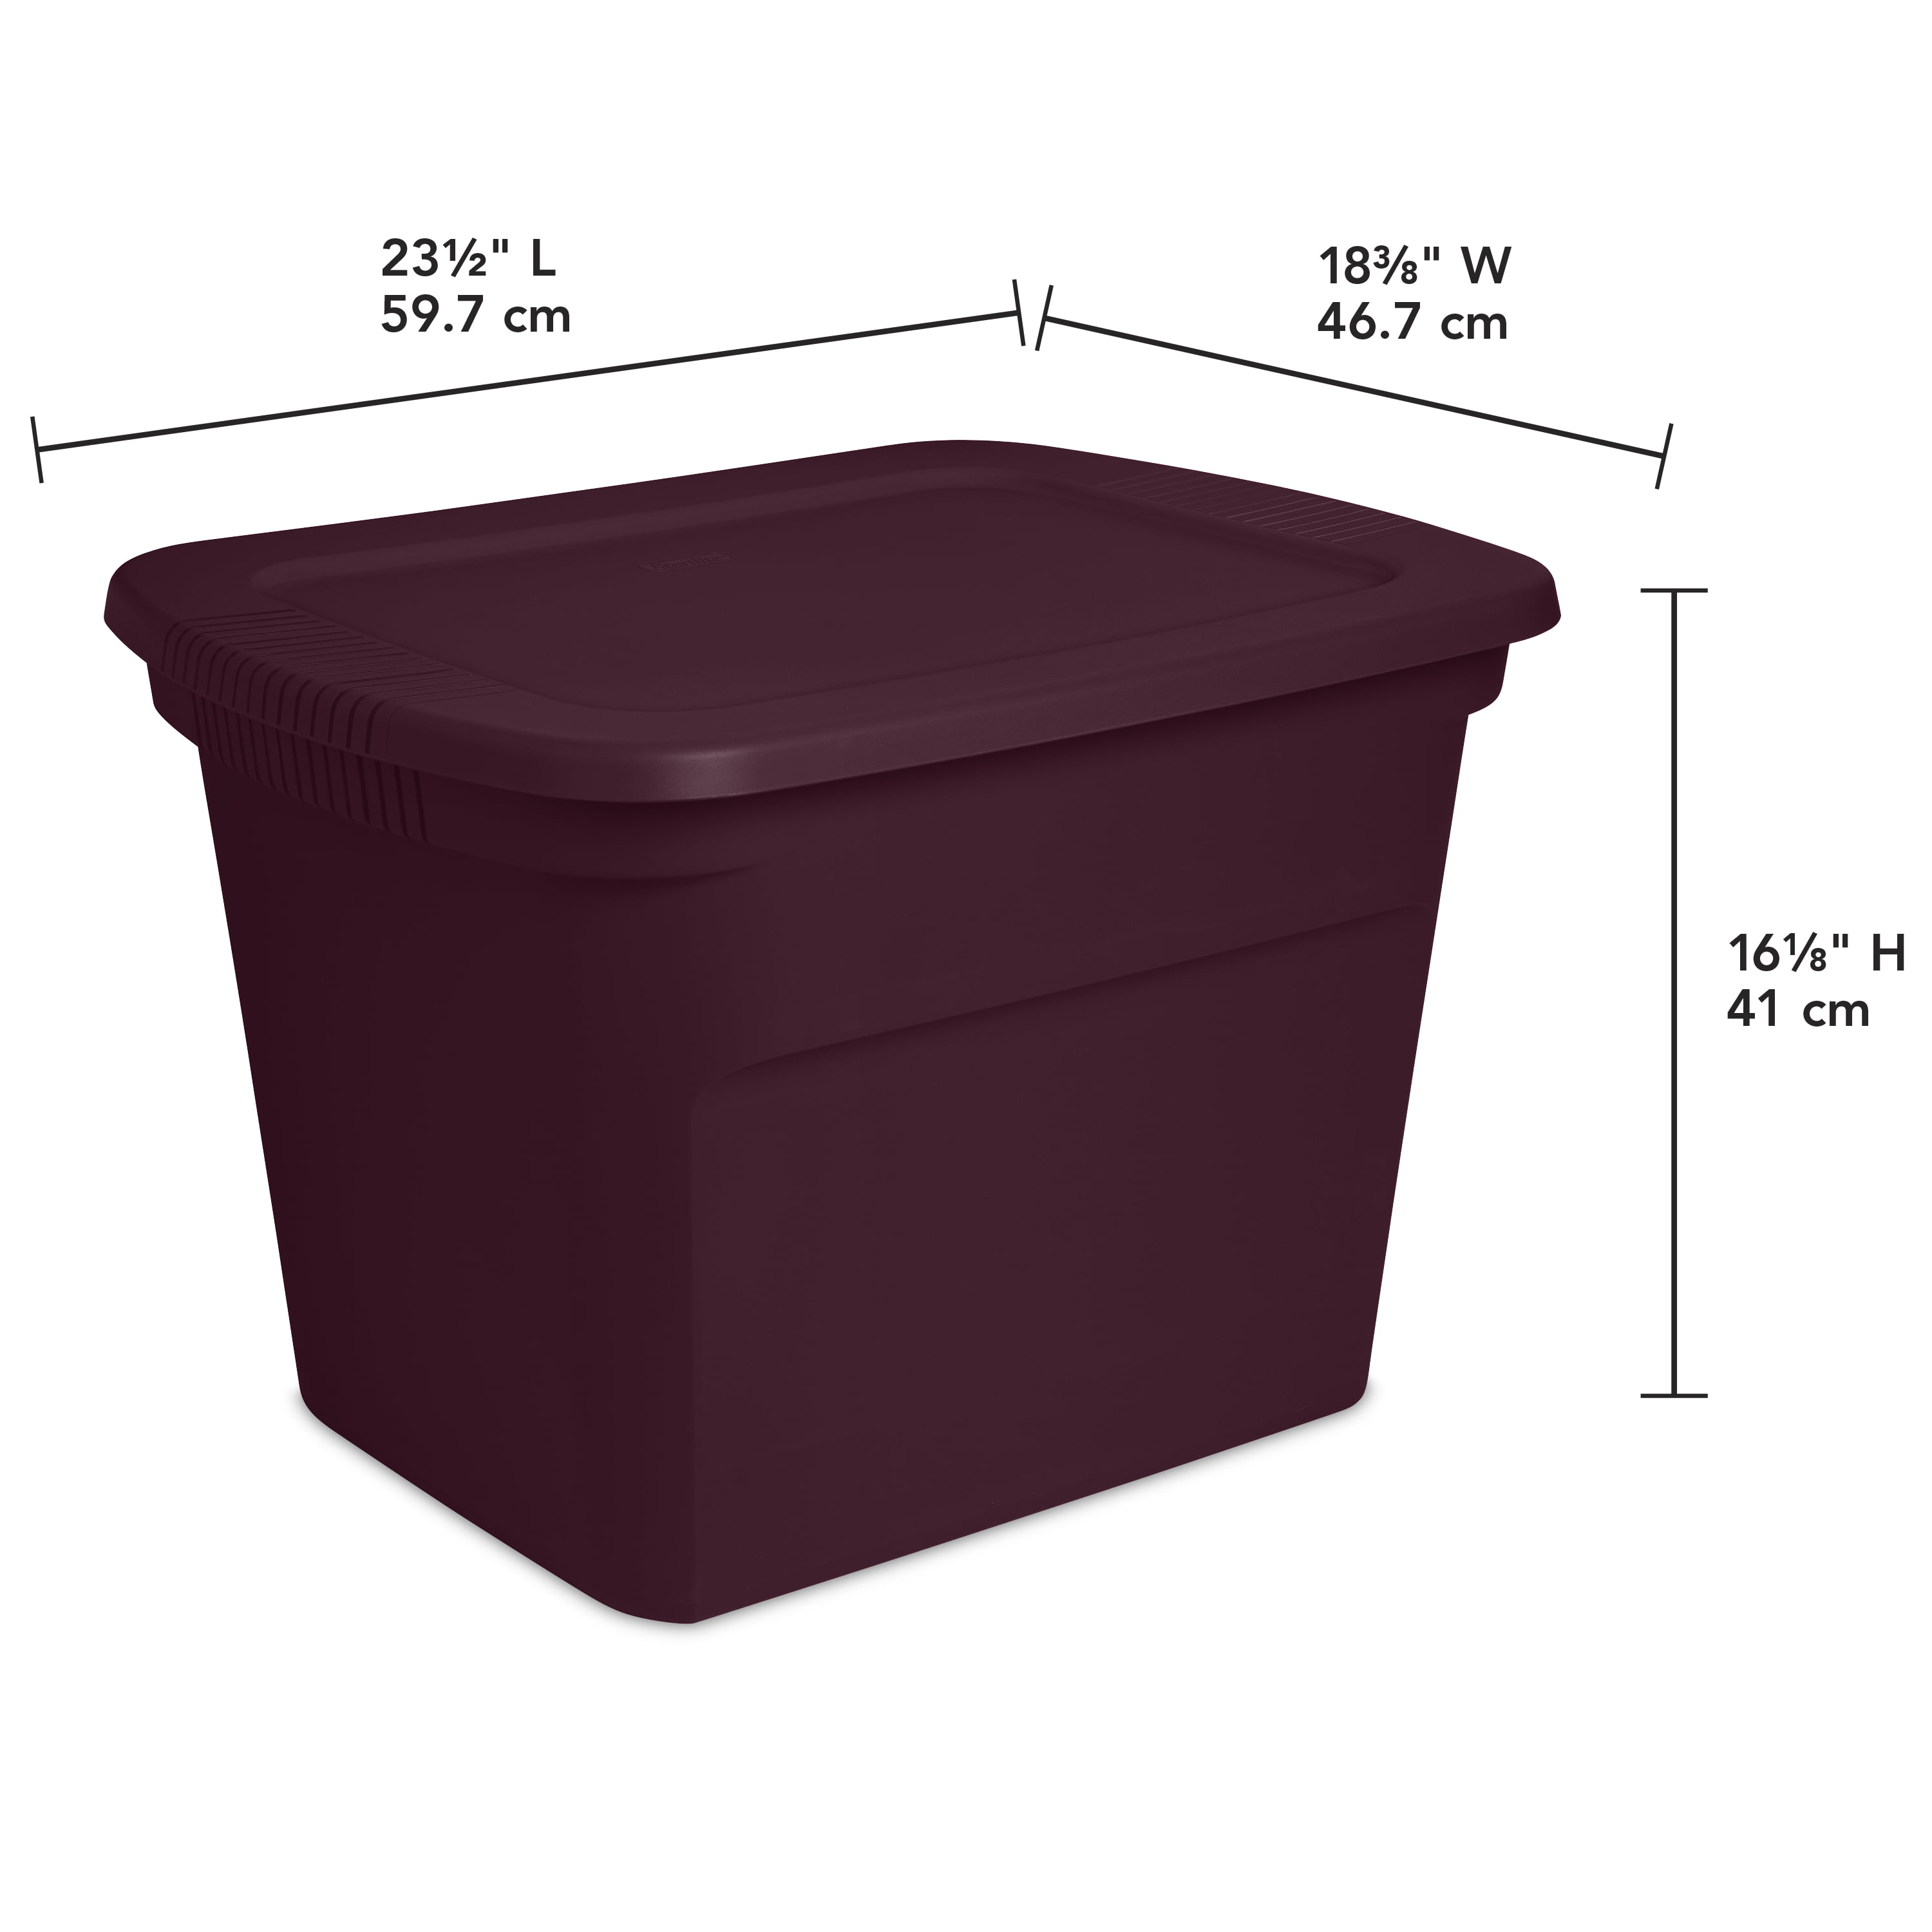 Sterilite Modular Latch Boxe Tote Storage Container Metropolis Burgundy Set of 4 